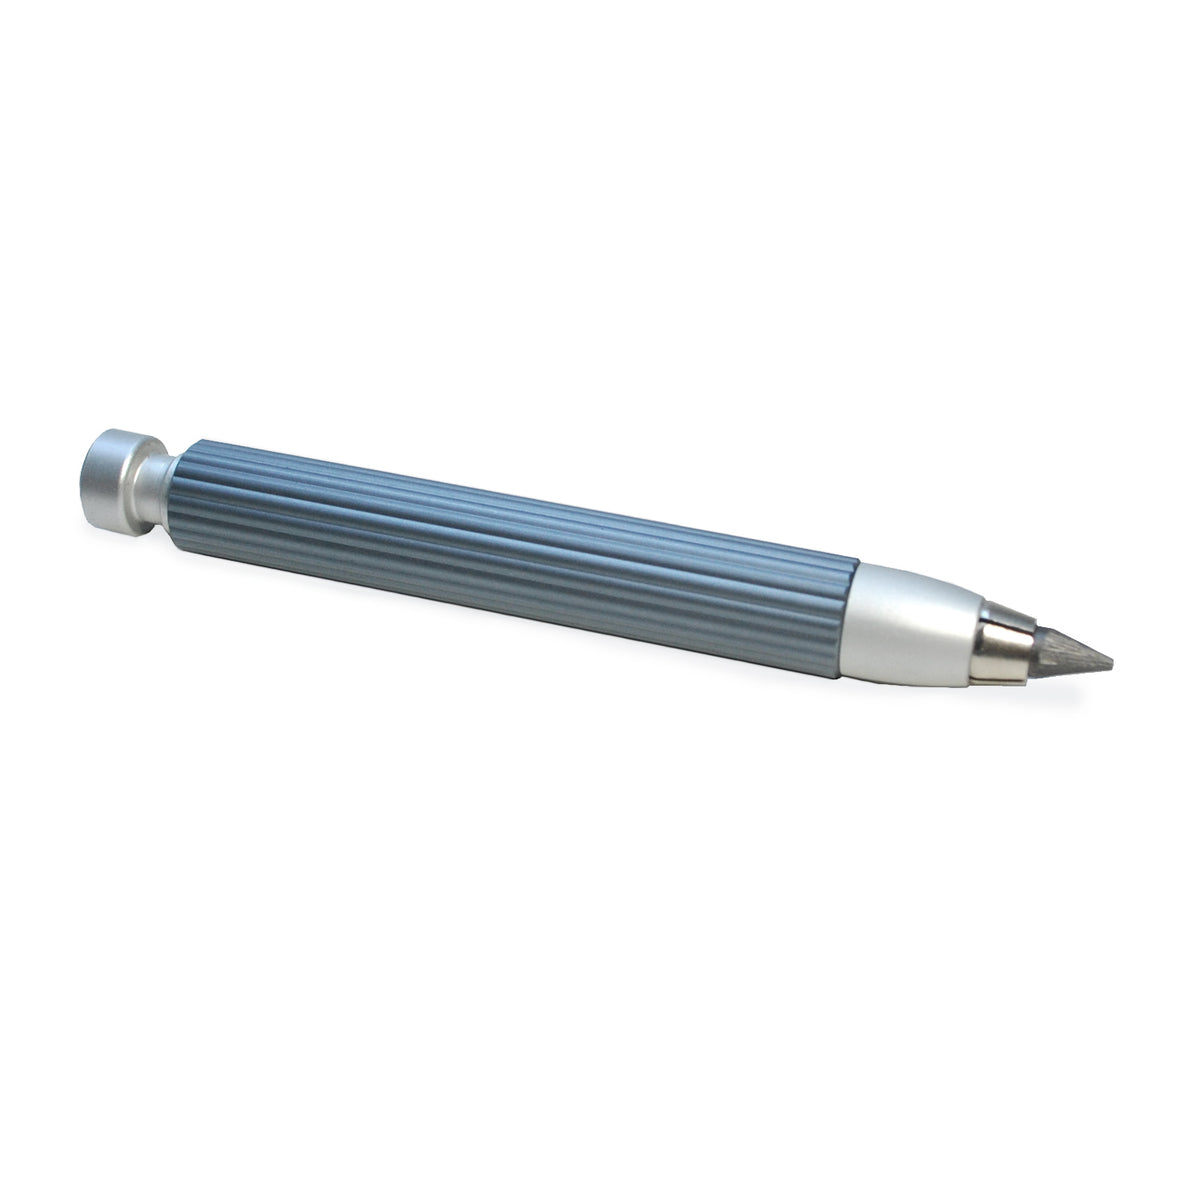 Worther Profil 5.6mm Mechanical Pencil- Grey